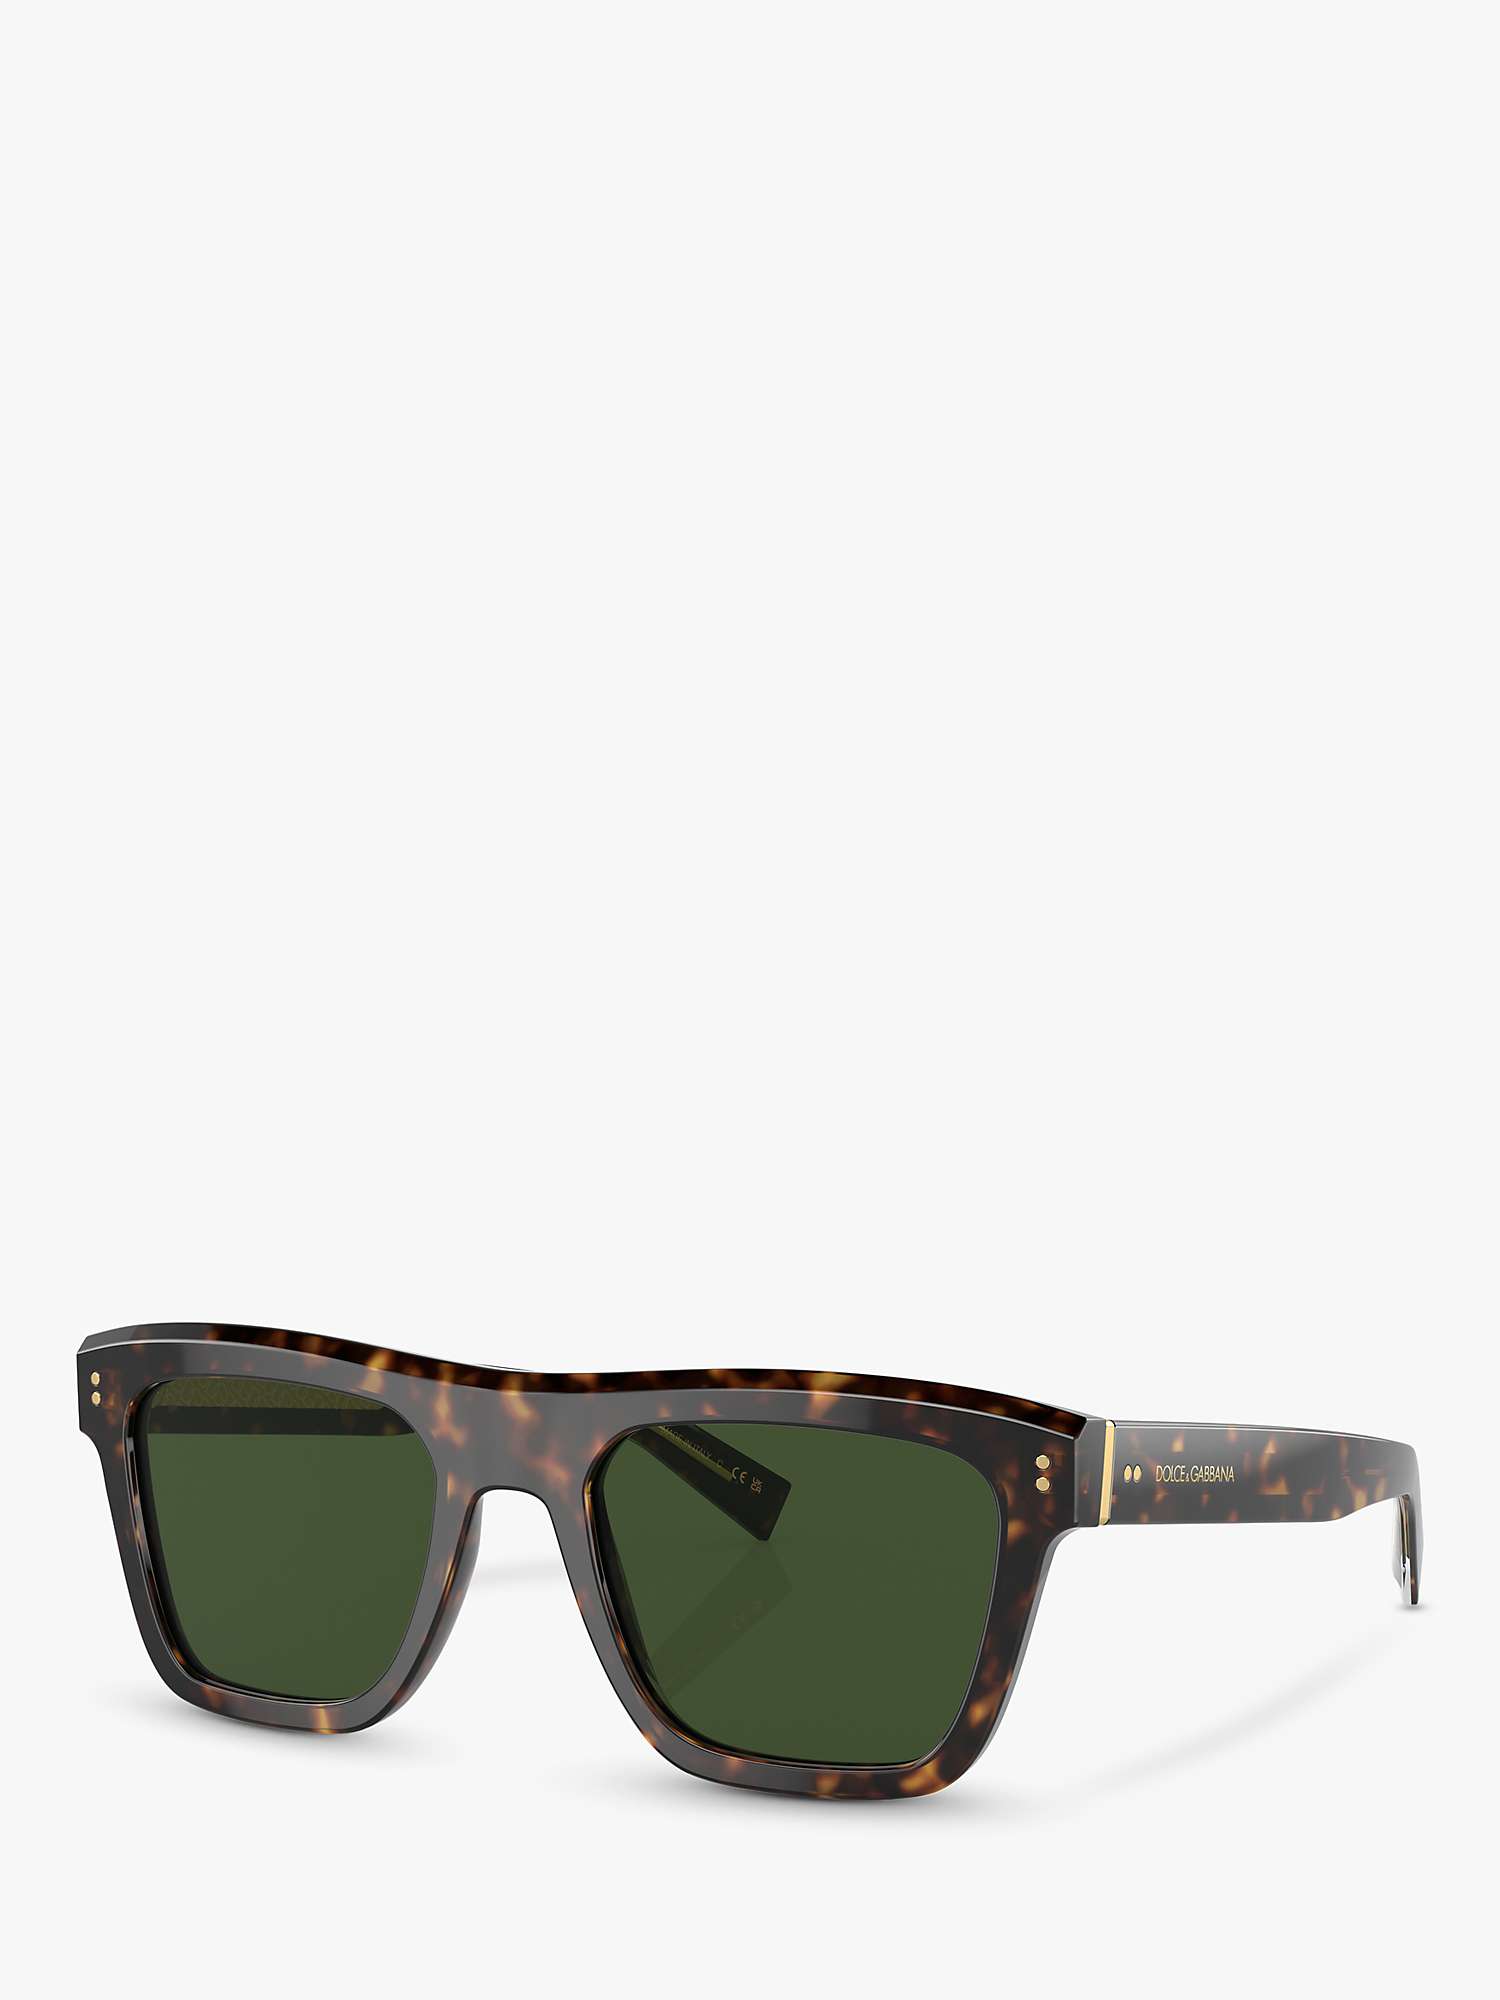 Buy Dolce & Gabbana DG4420 Men's Square Sunglasses, Havana/Green Online at johnlewis.com